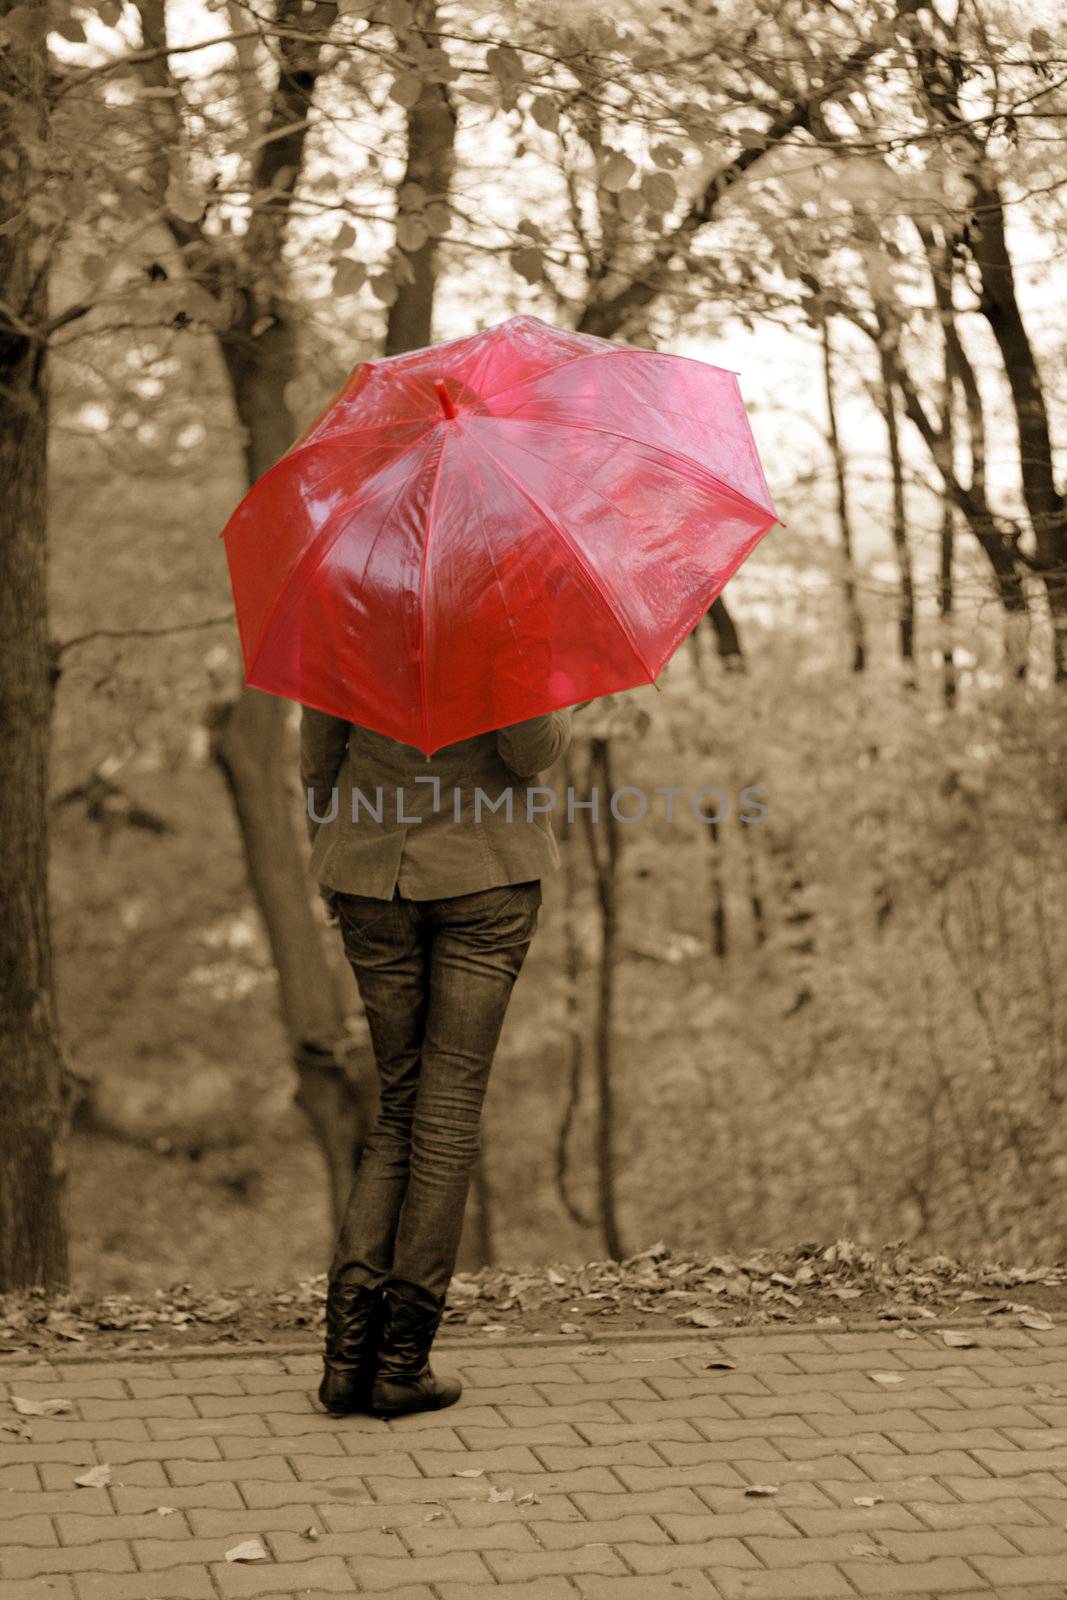 The girl and an umbrella by KadunmatriX